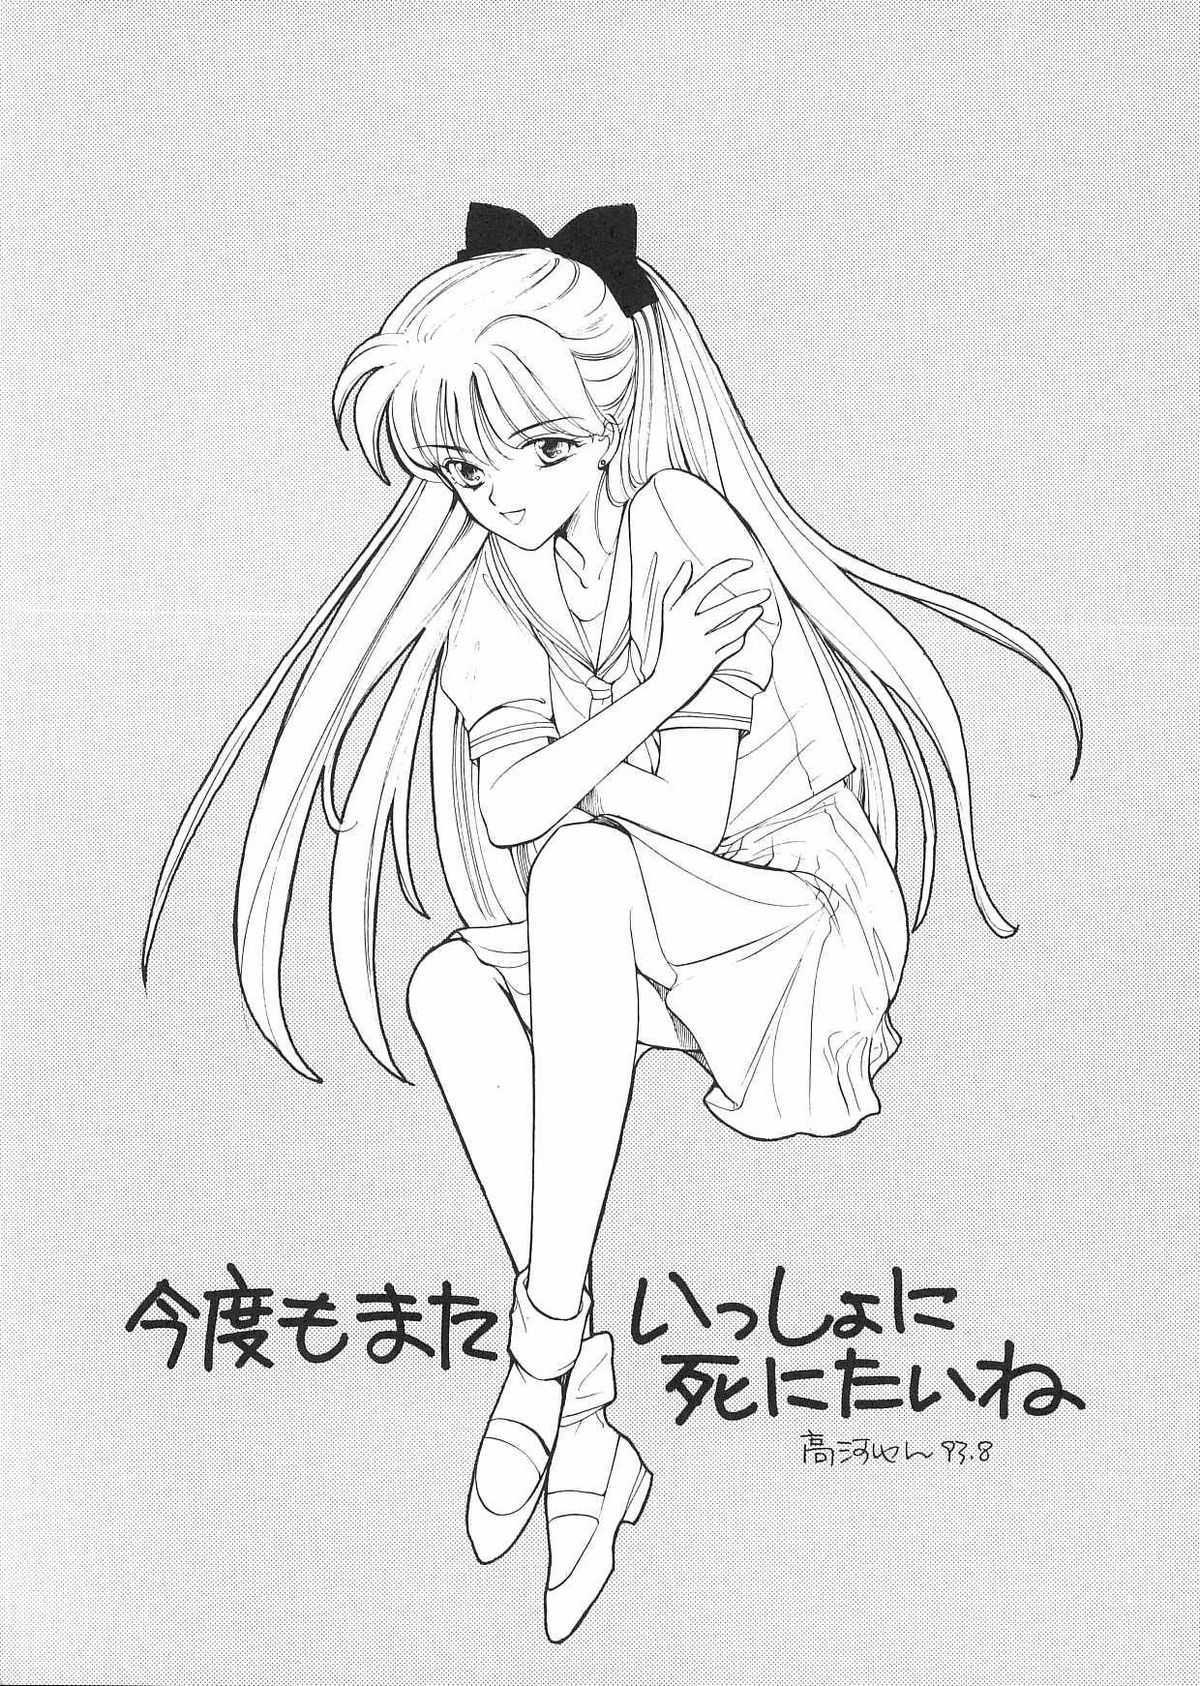 [Kotatsuya Co.] Pretty Soldier Sailor Moon F [Sailor Moon] 